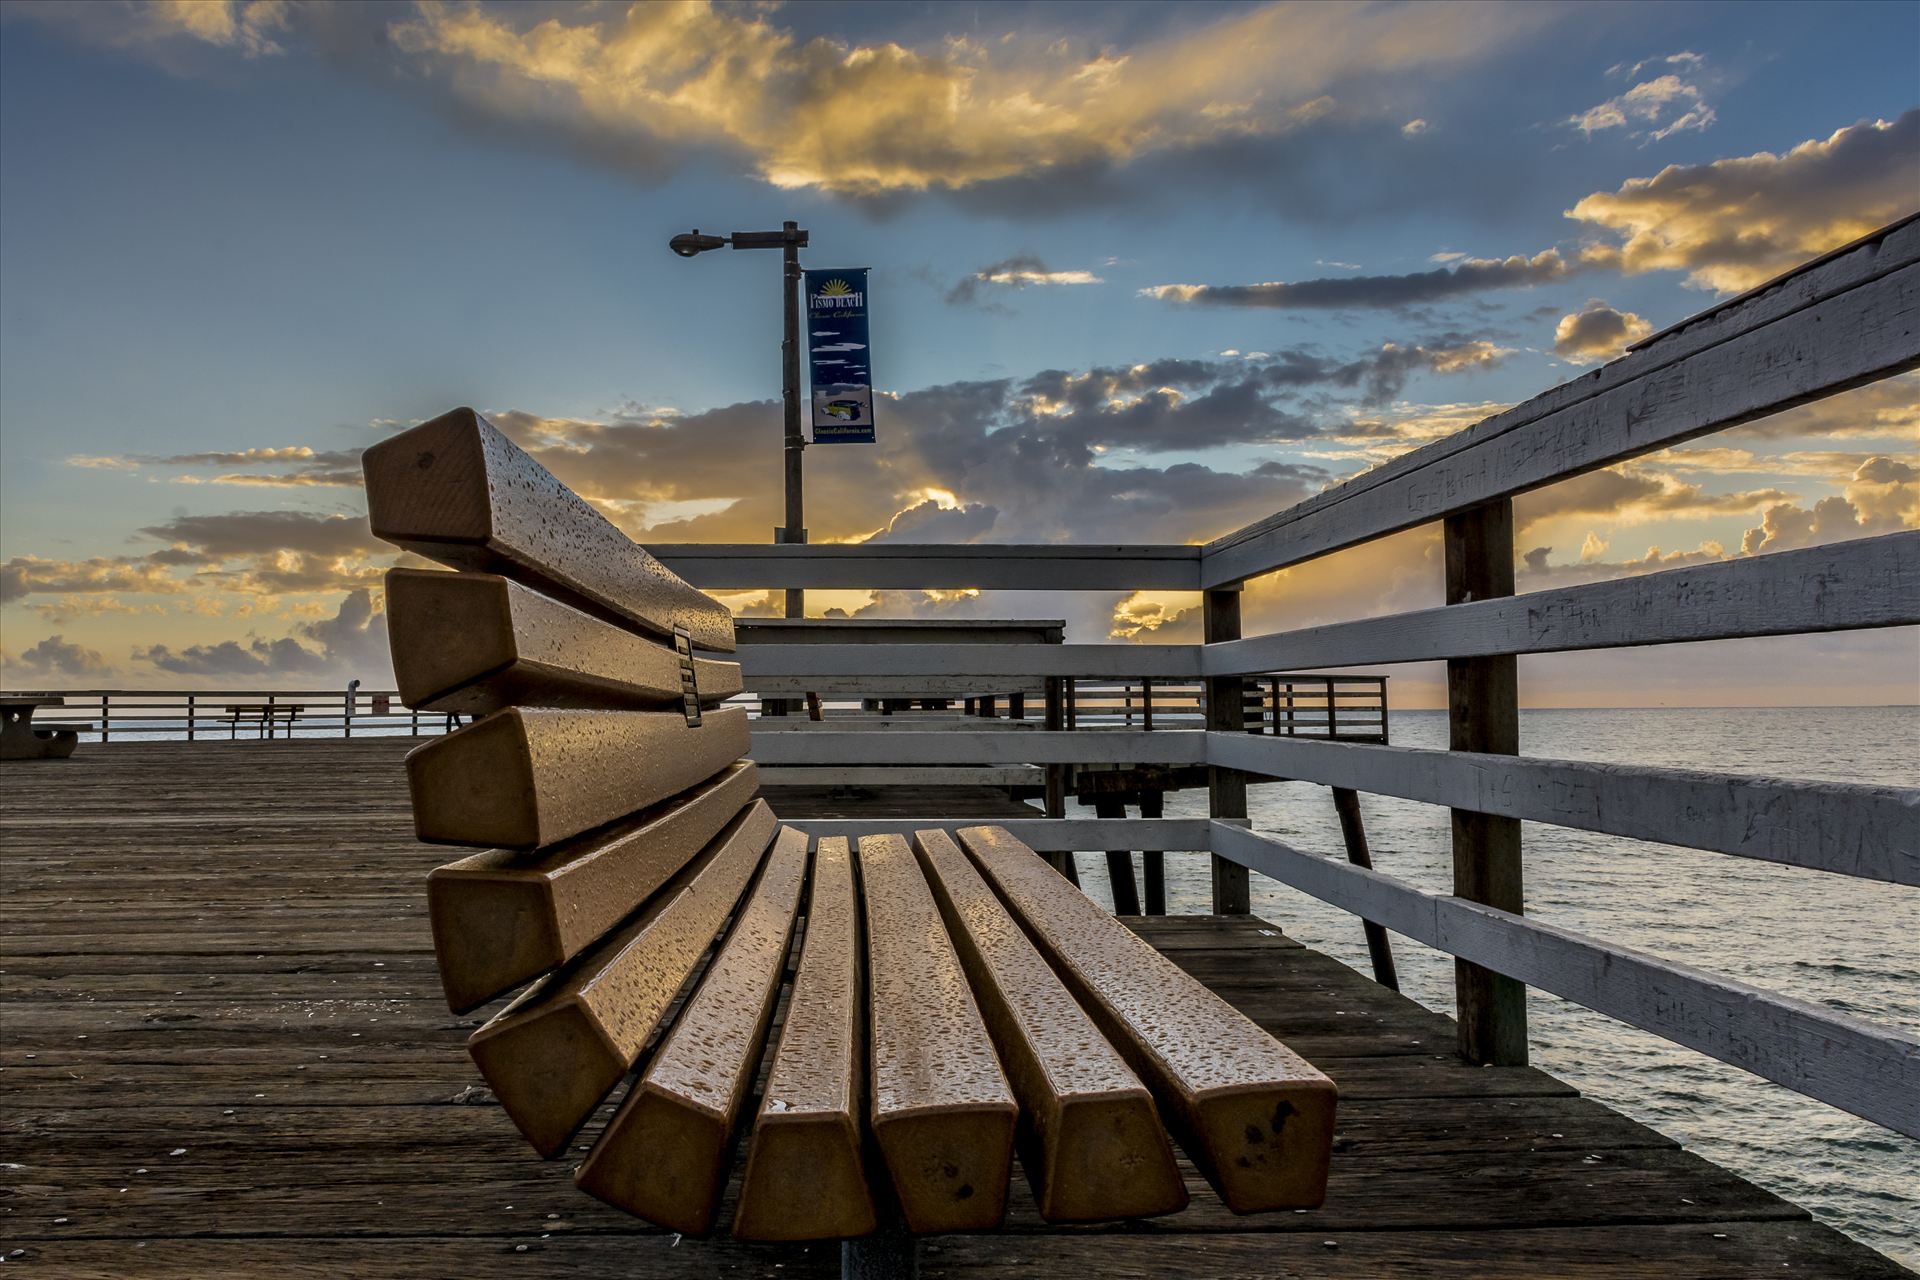 Rainy Bench.jpg Rain slicked bench on Pismo Beach pier at sunset by Sarah Williams